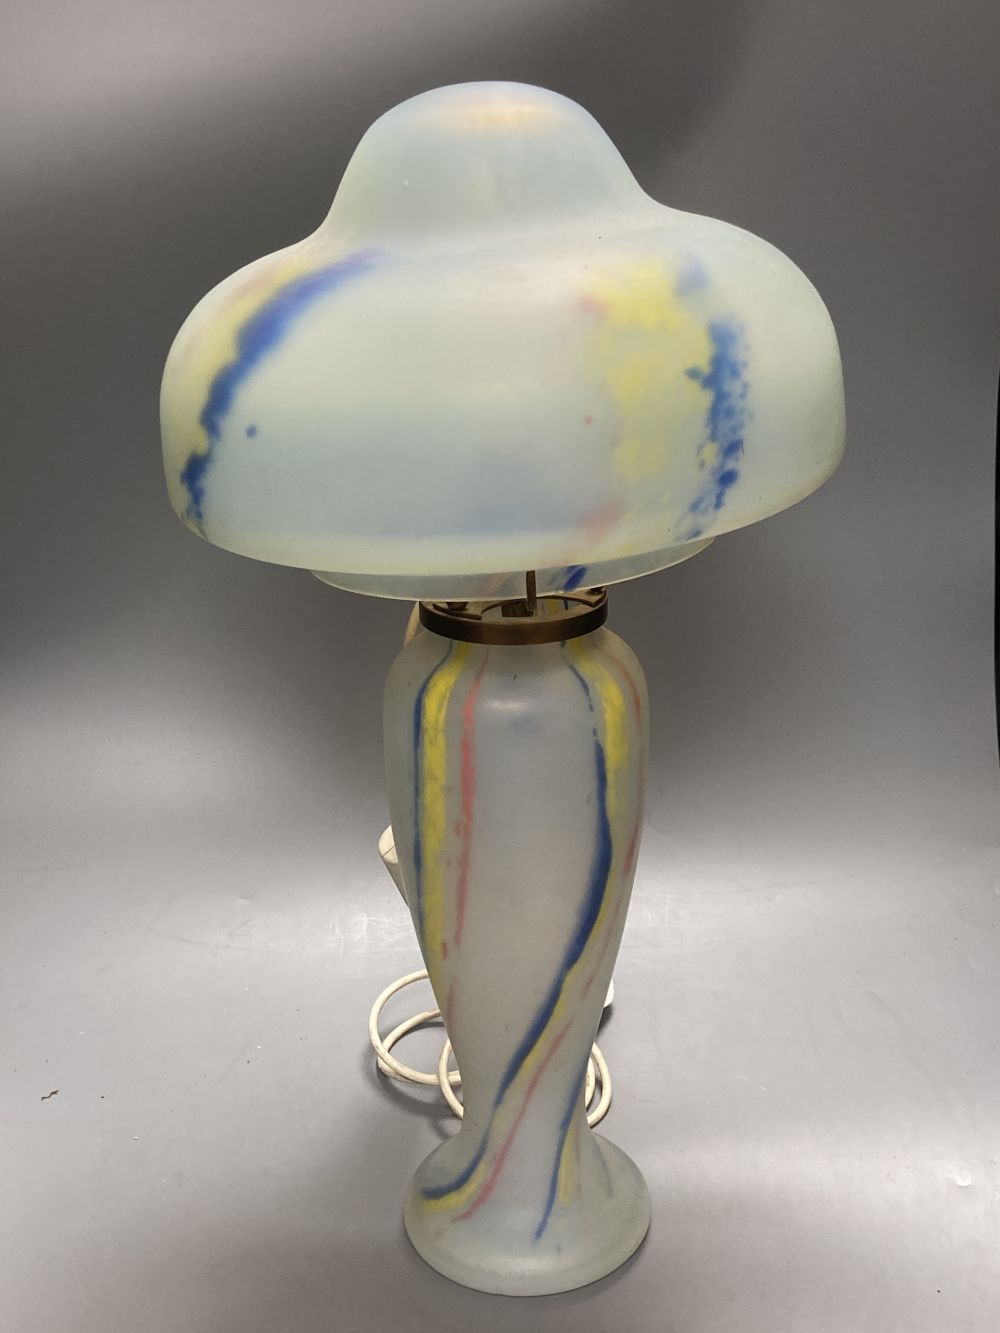 An Sabino Verrier dart marbled glass mushroom lamp, script signature underside, overall 53cm